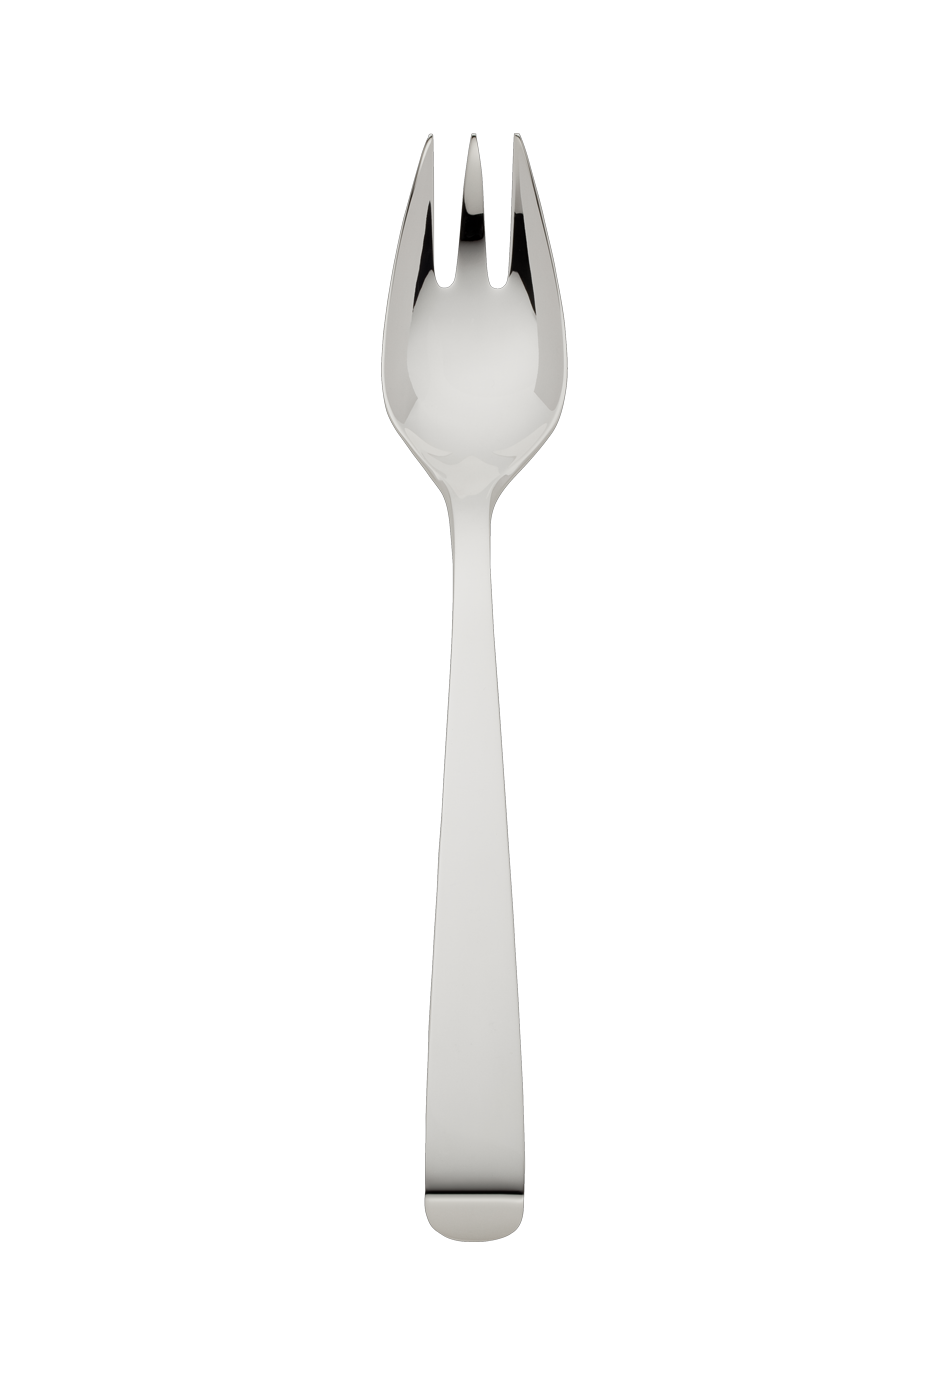 Alta Vegetable Fork (150g massive silverplated)